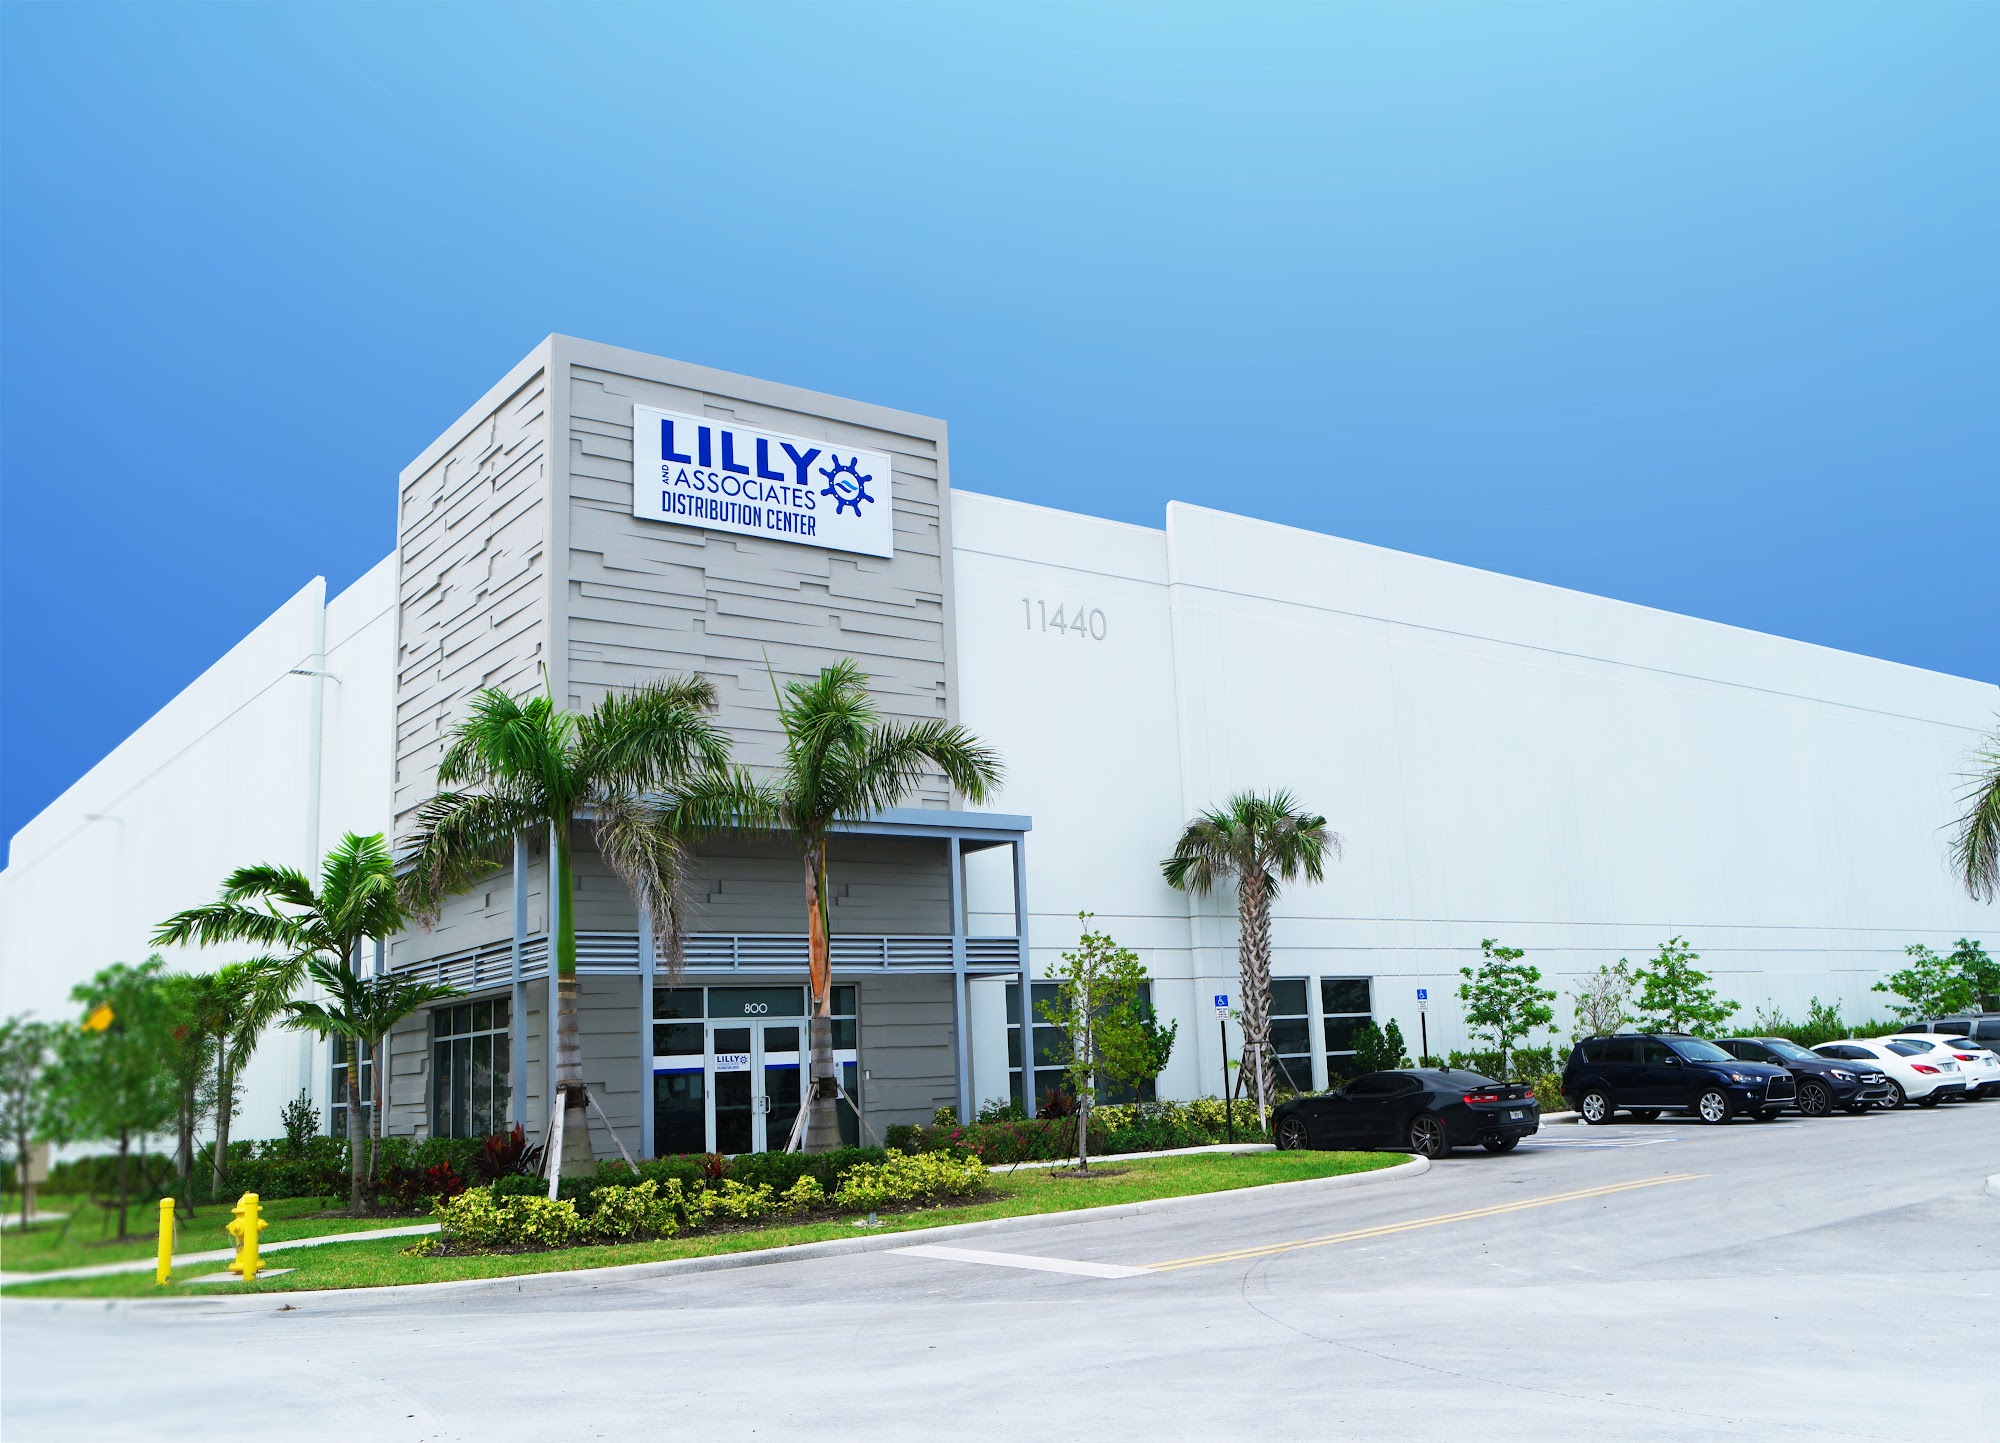 LILLY + Associates International Freight Forwarders, Inc.